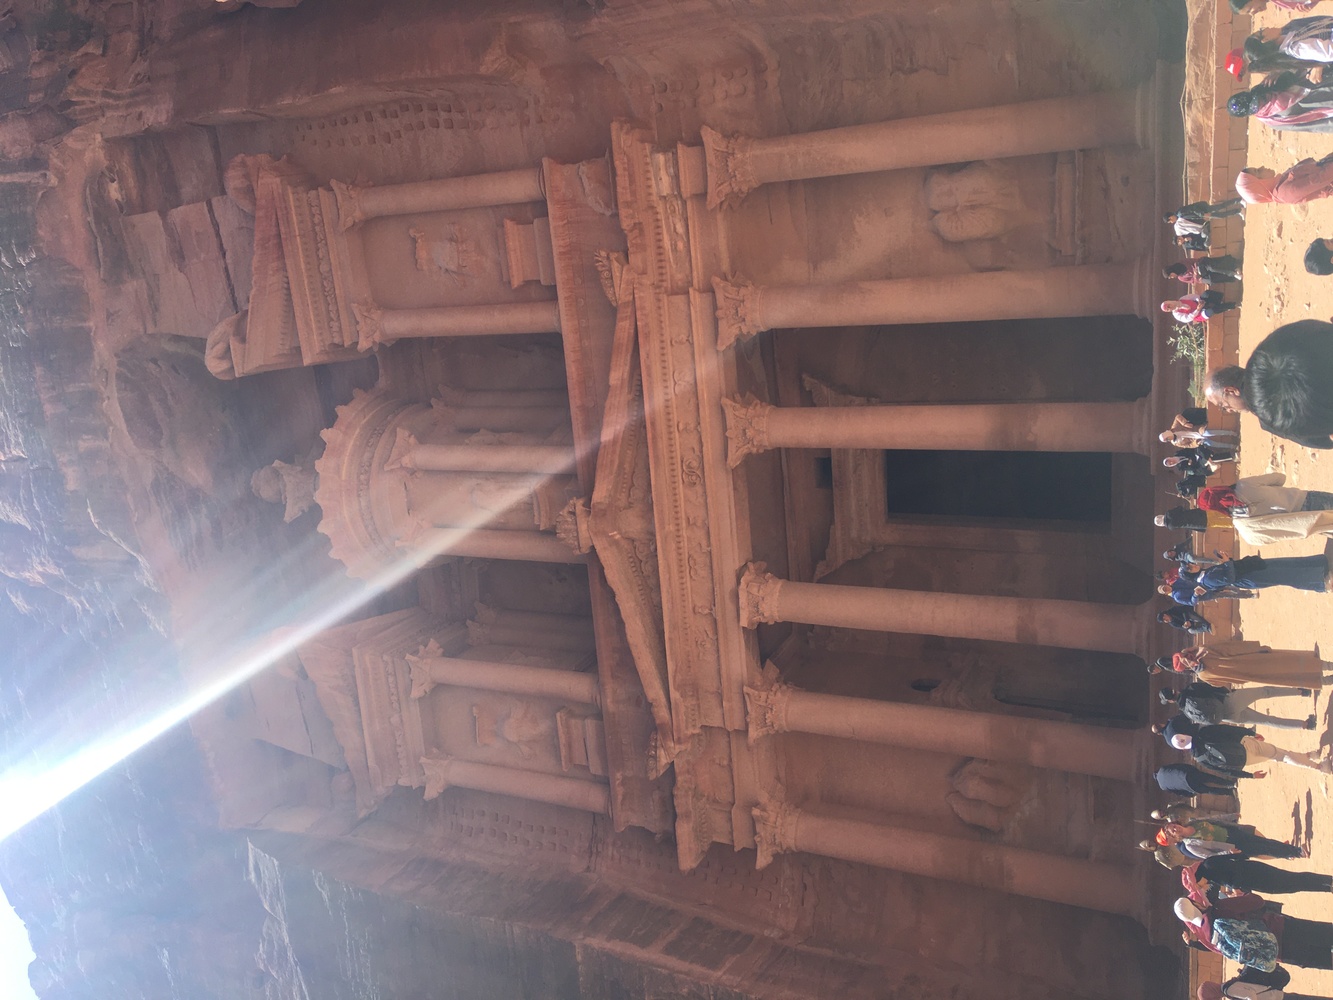 Petra - ahol megelevenedik a múlt